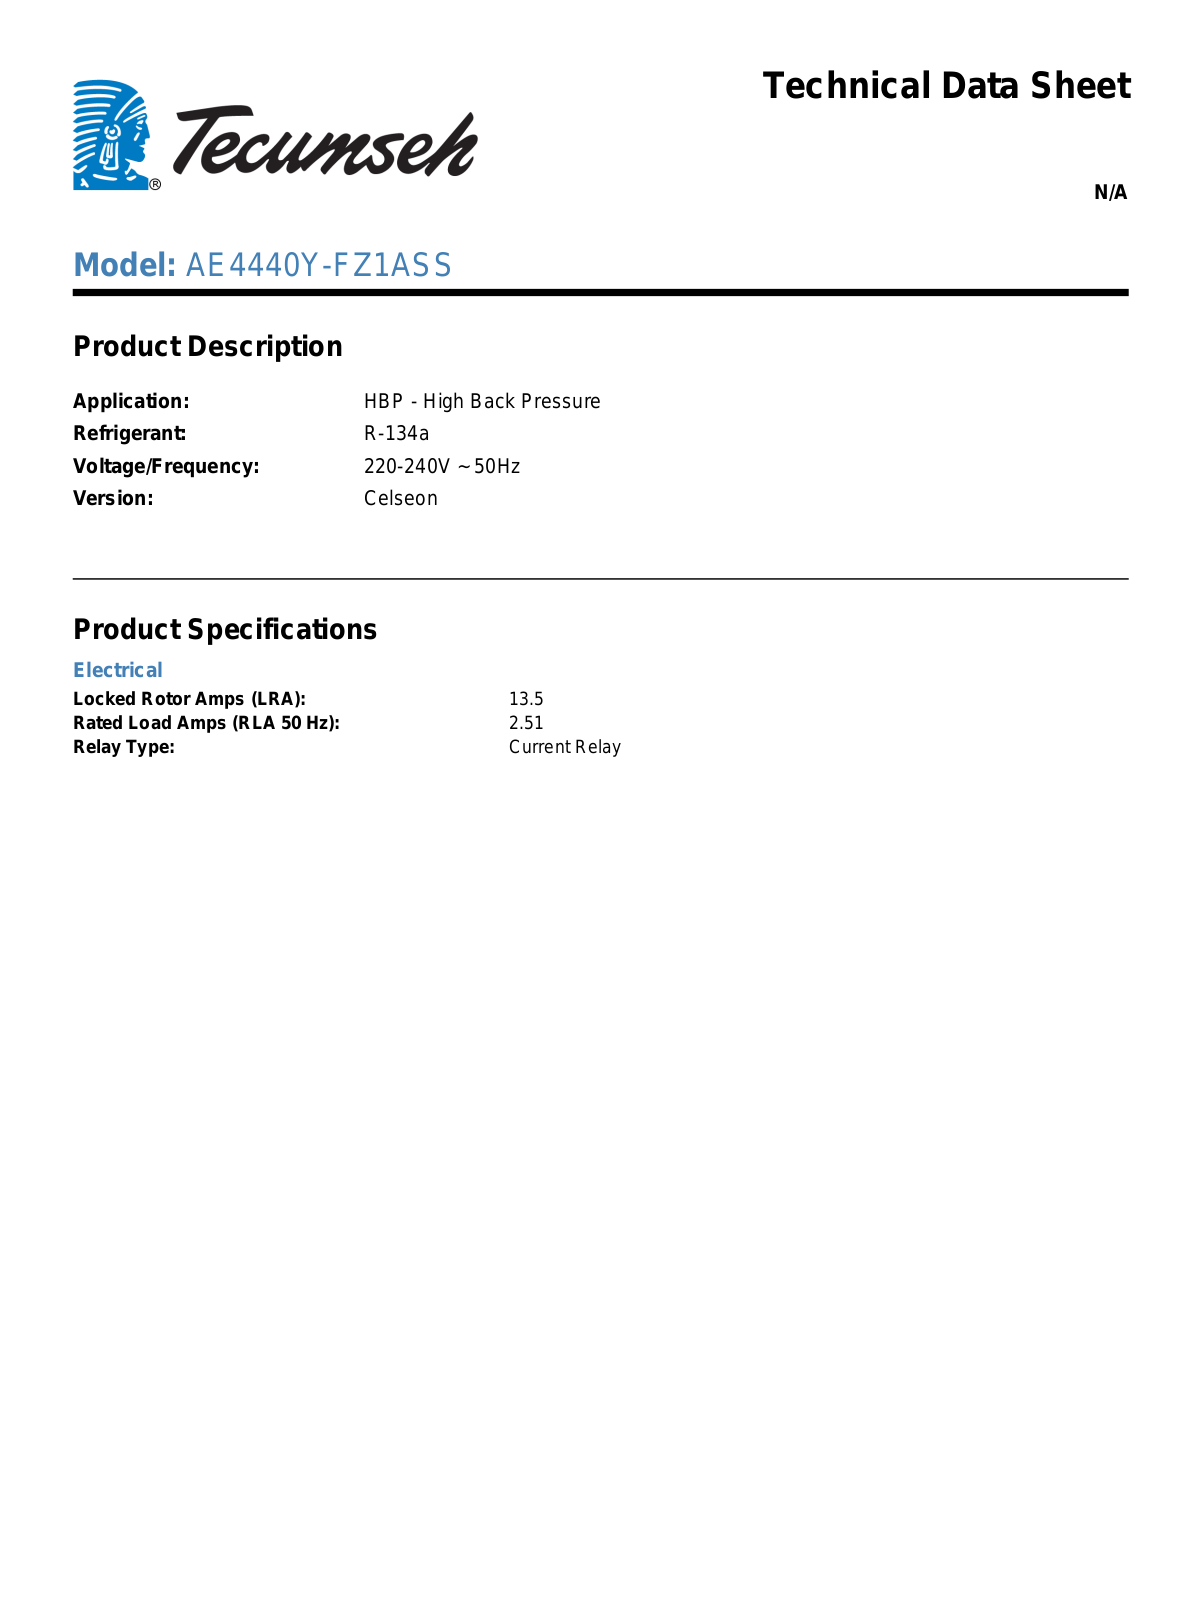 Tecumseh AE4440Y-FZ1ASS User Manual